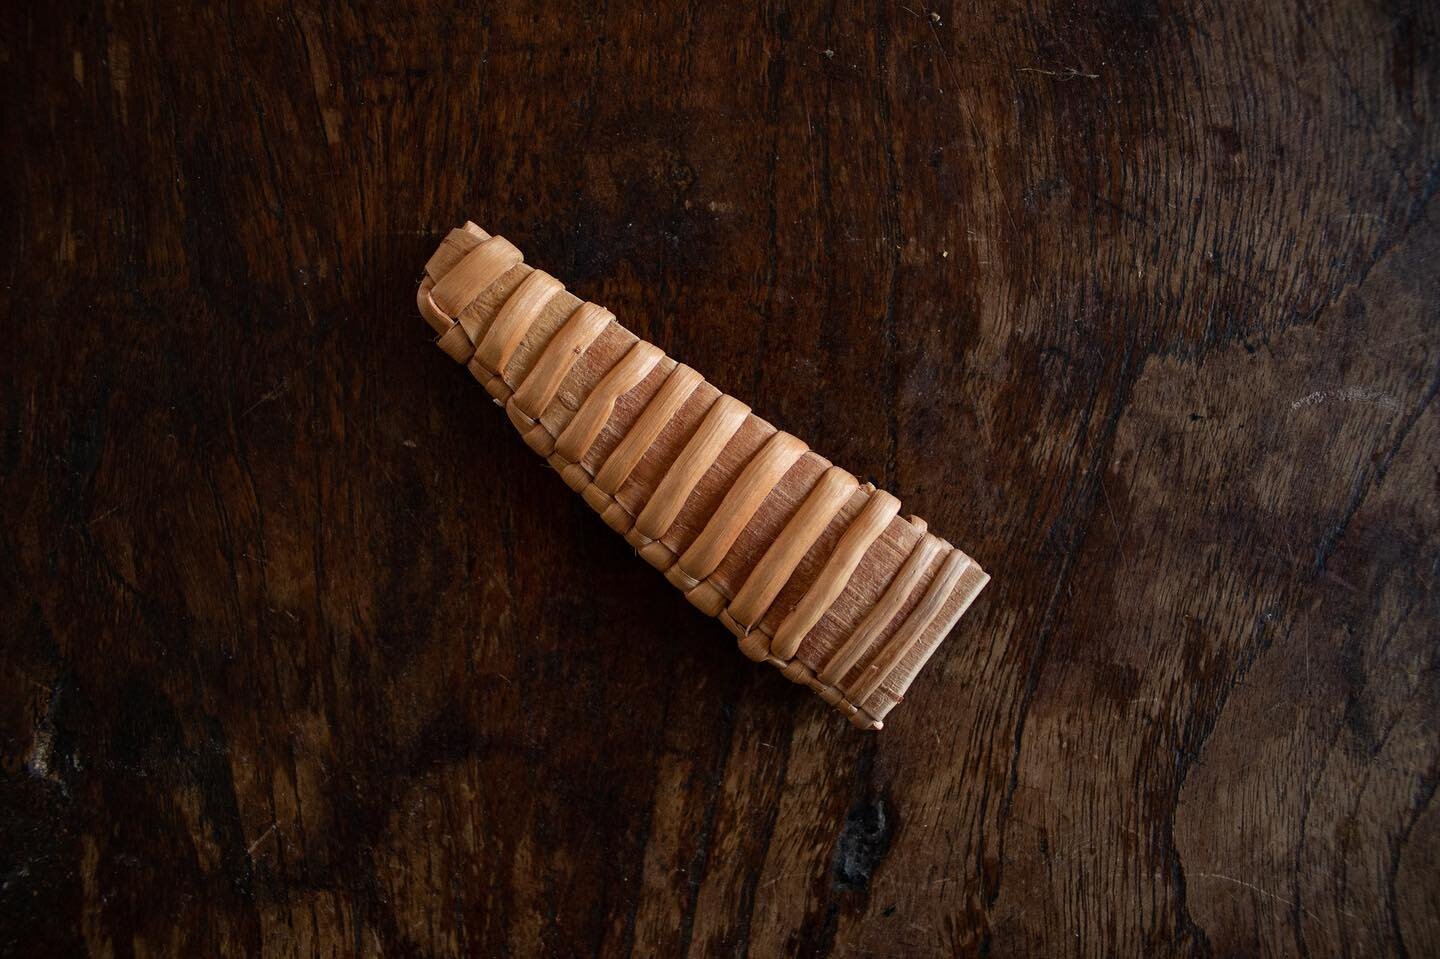 birch bark &amp; root sheath for @morakniv 106

www.woodspirithandcraft.com

#birchbarksheath #woodcarving #greenwoodworking